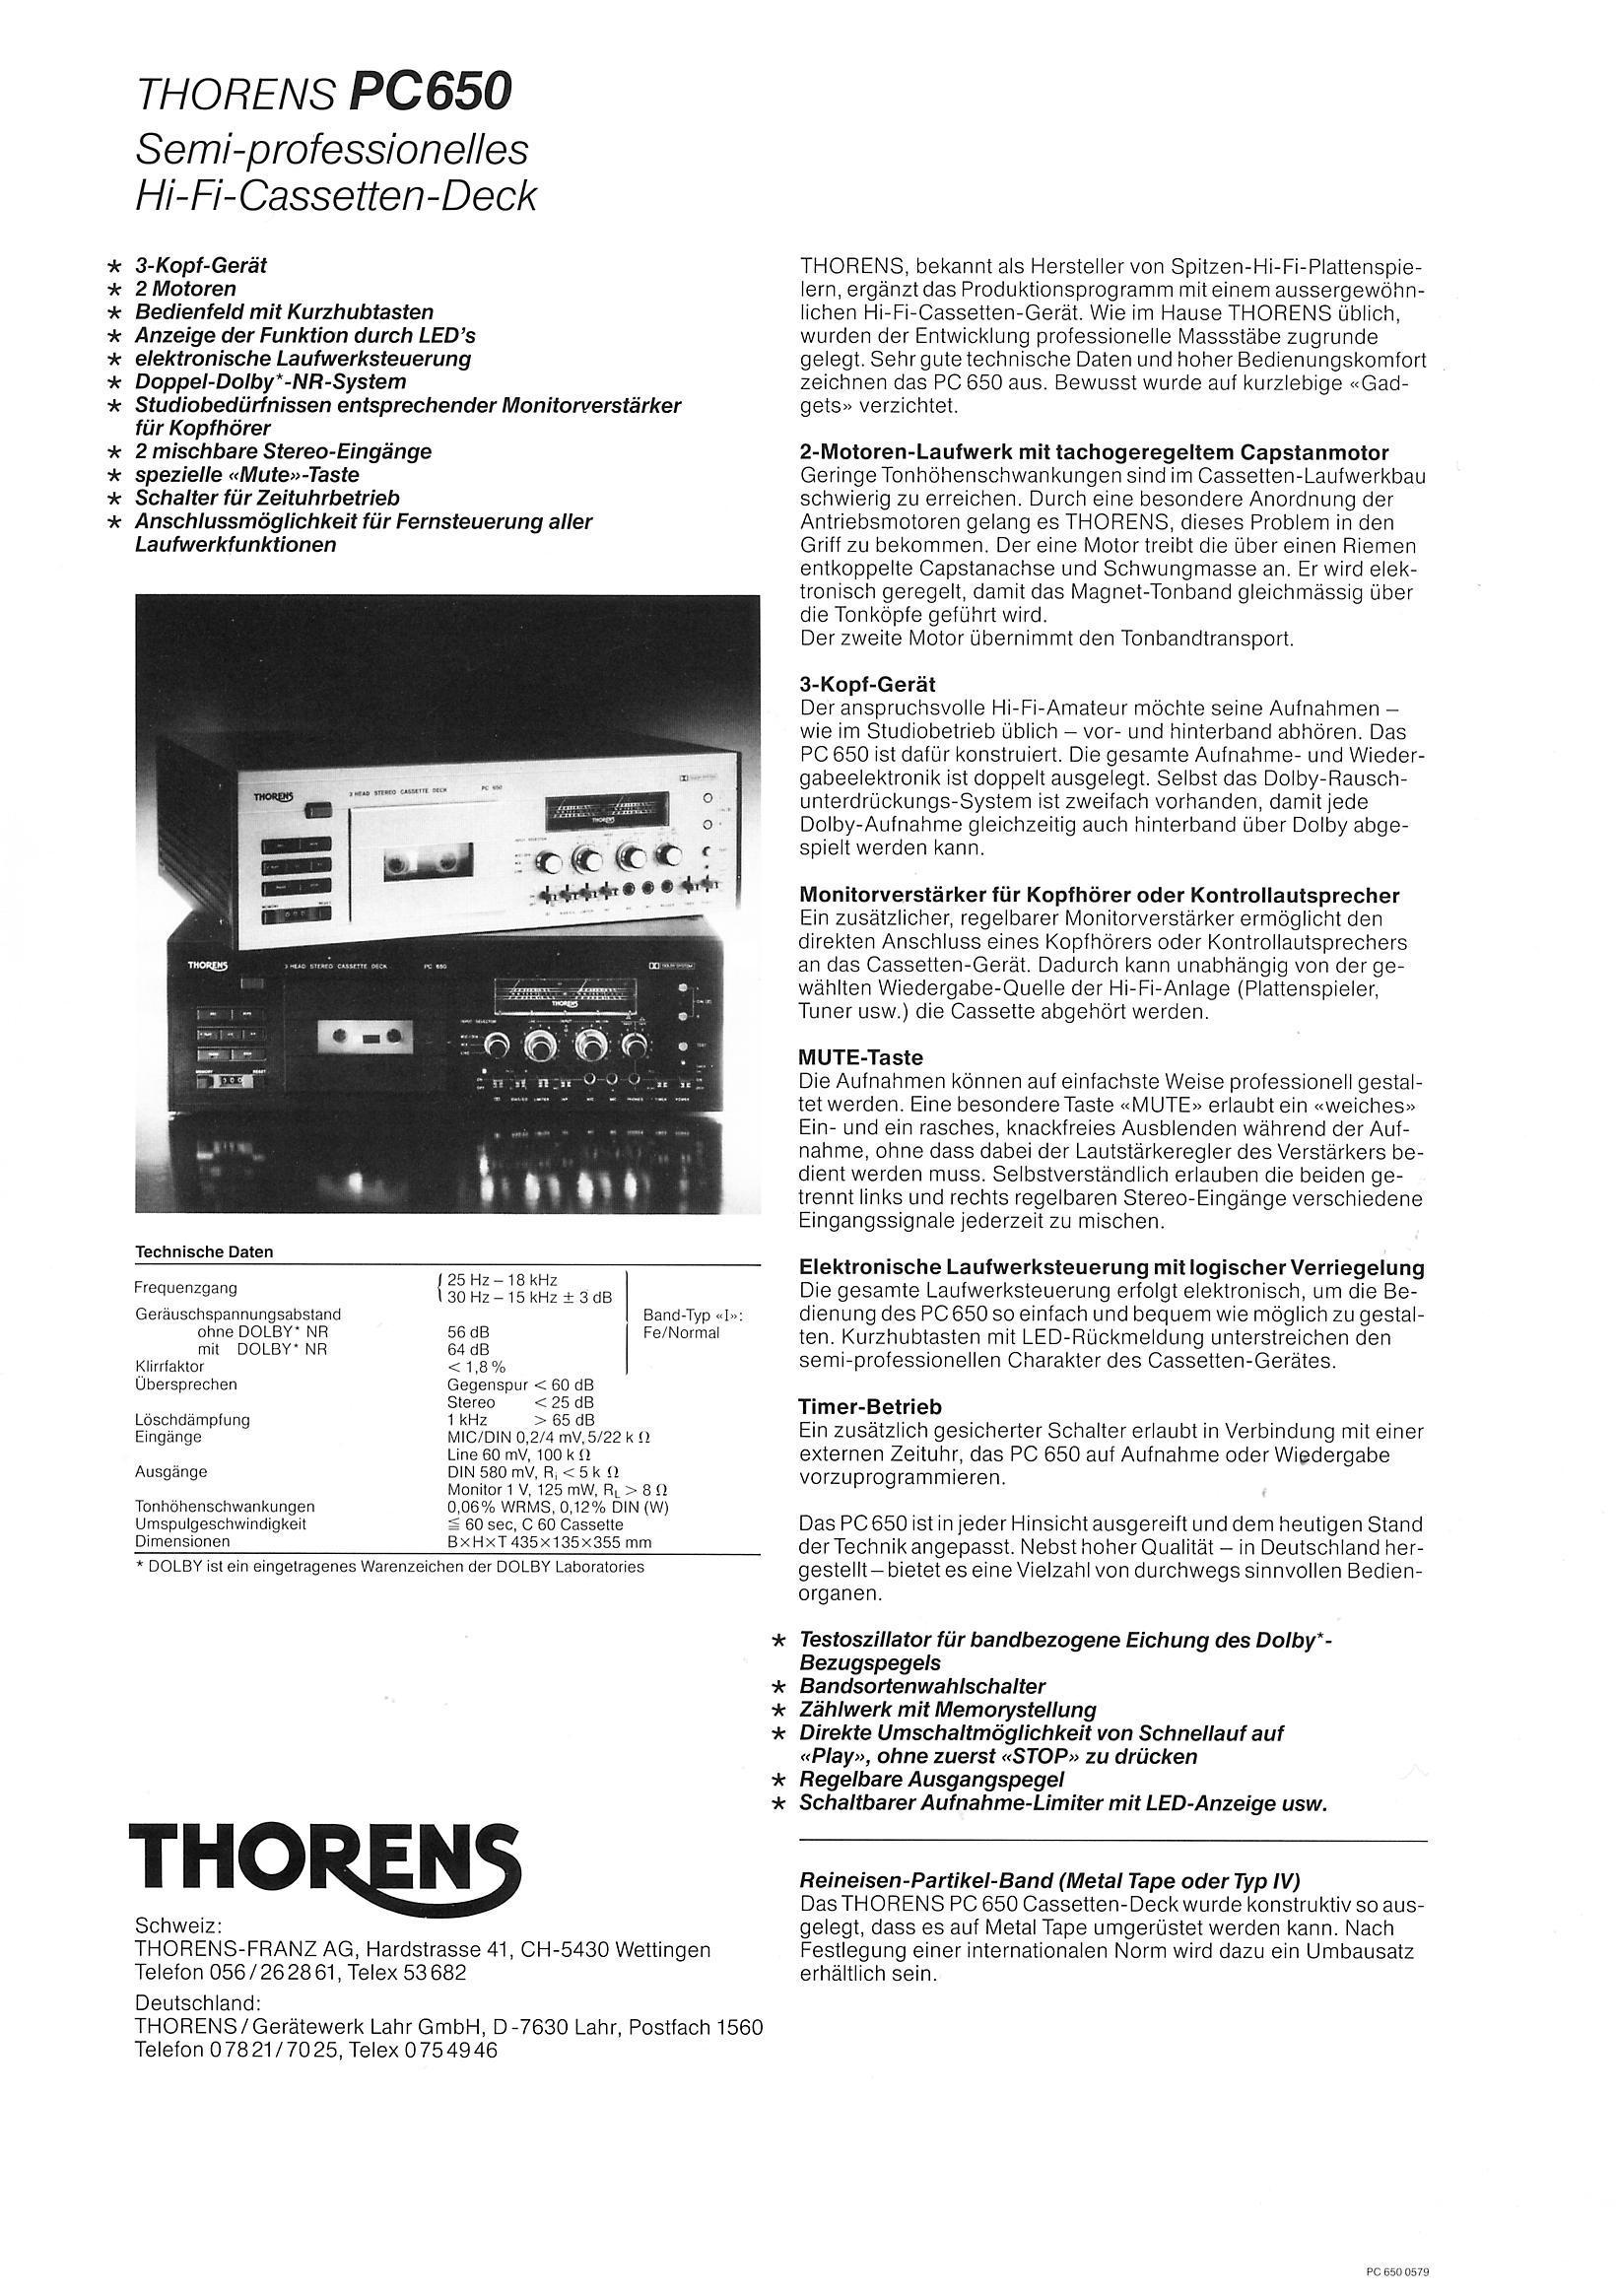 Thorens PC-650-Prospekt-2.jpg